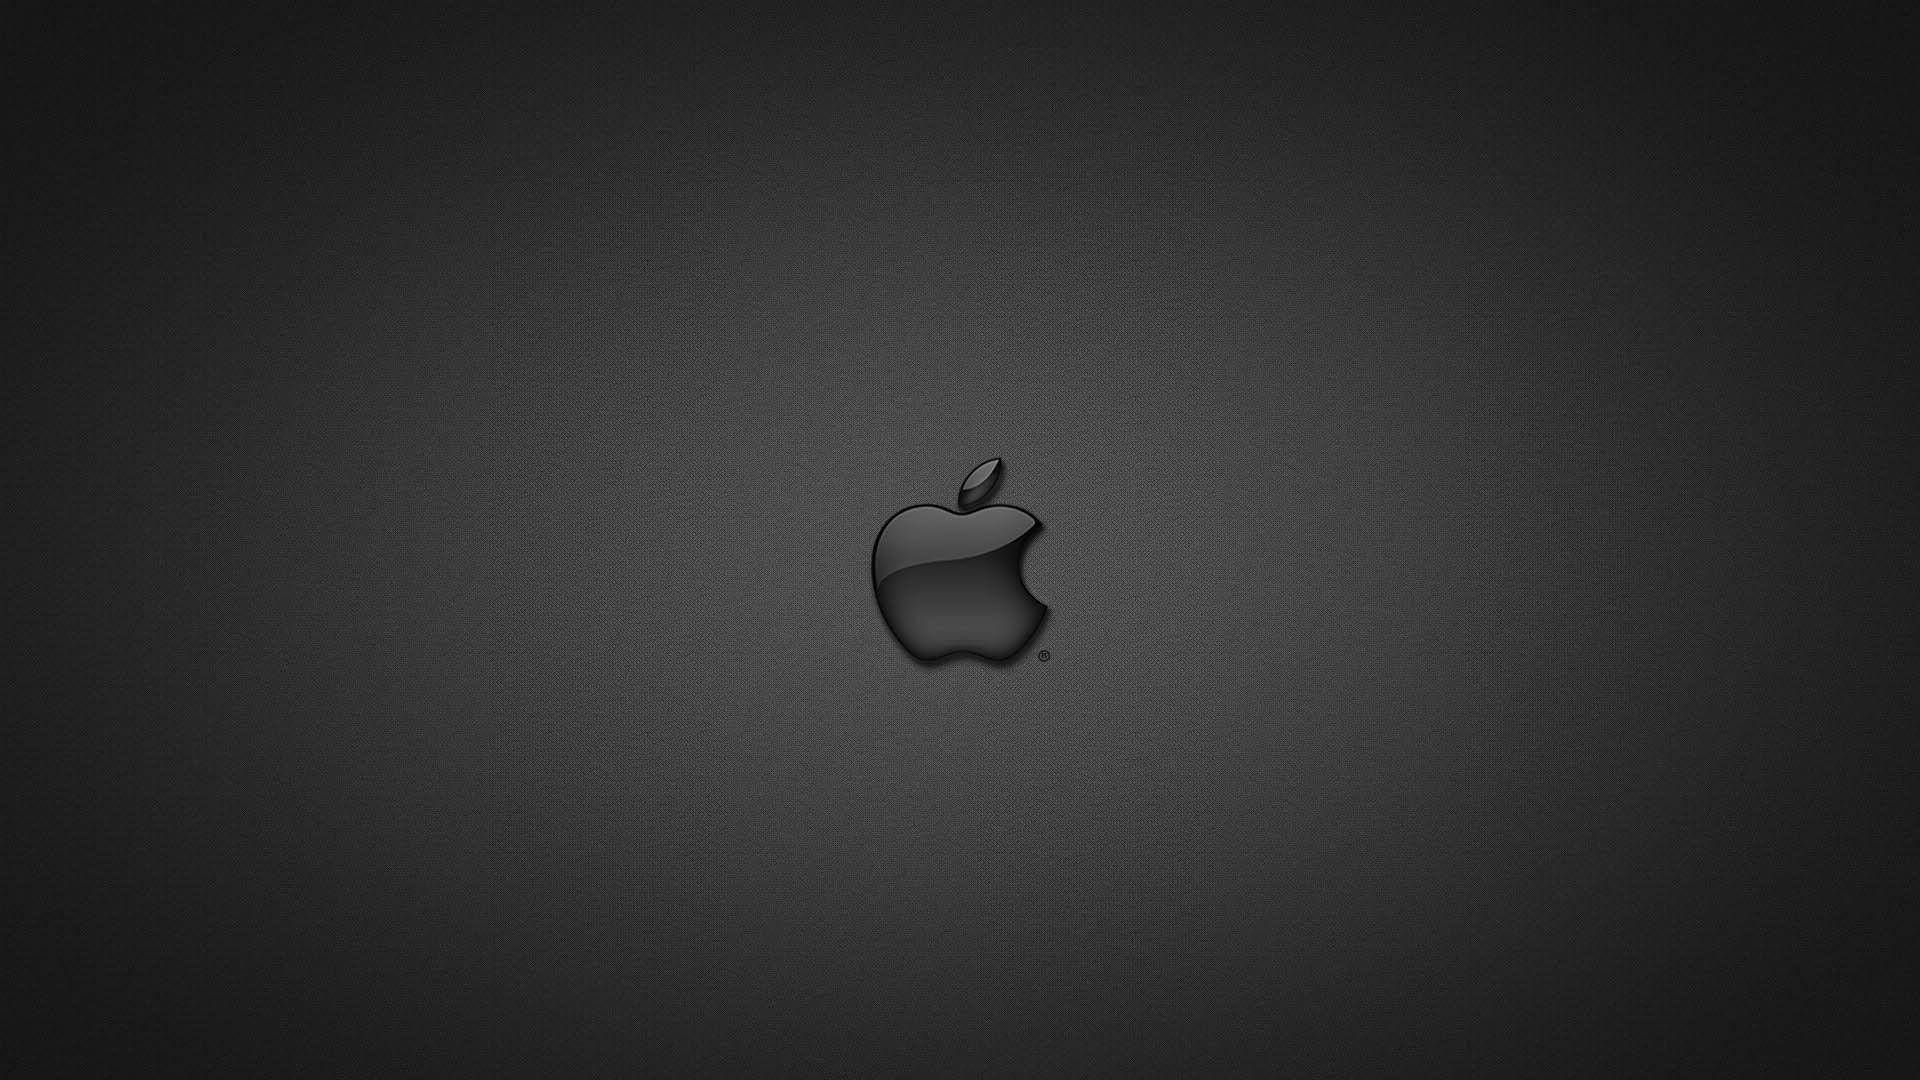 Matte Black Apple Icon In Solid Black Background